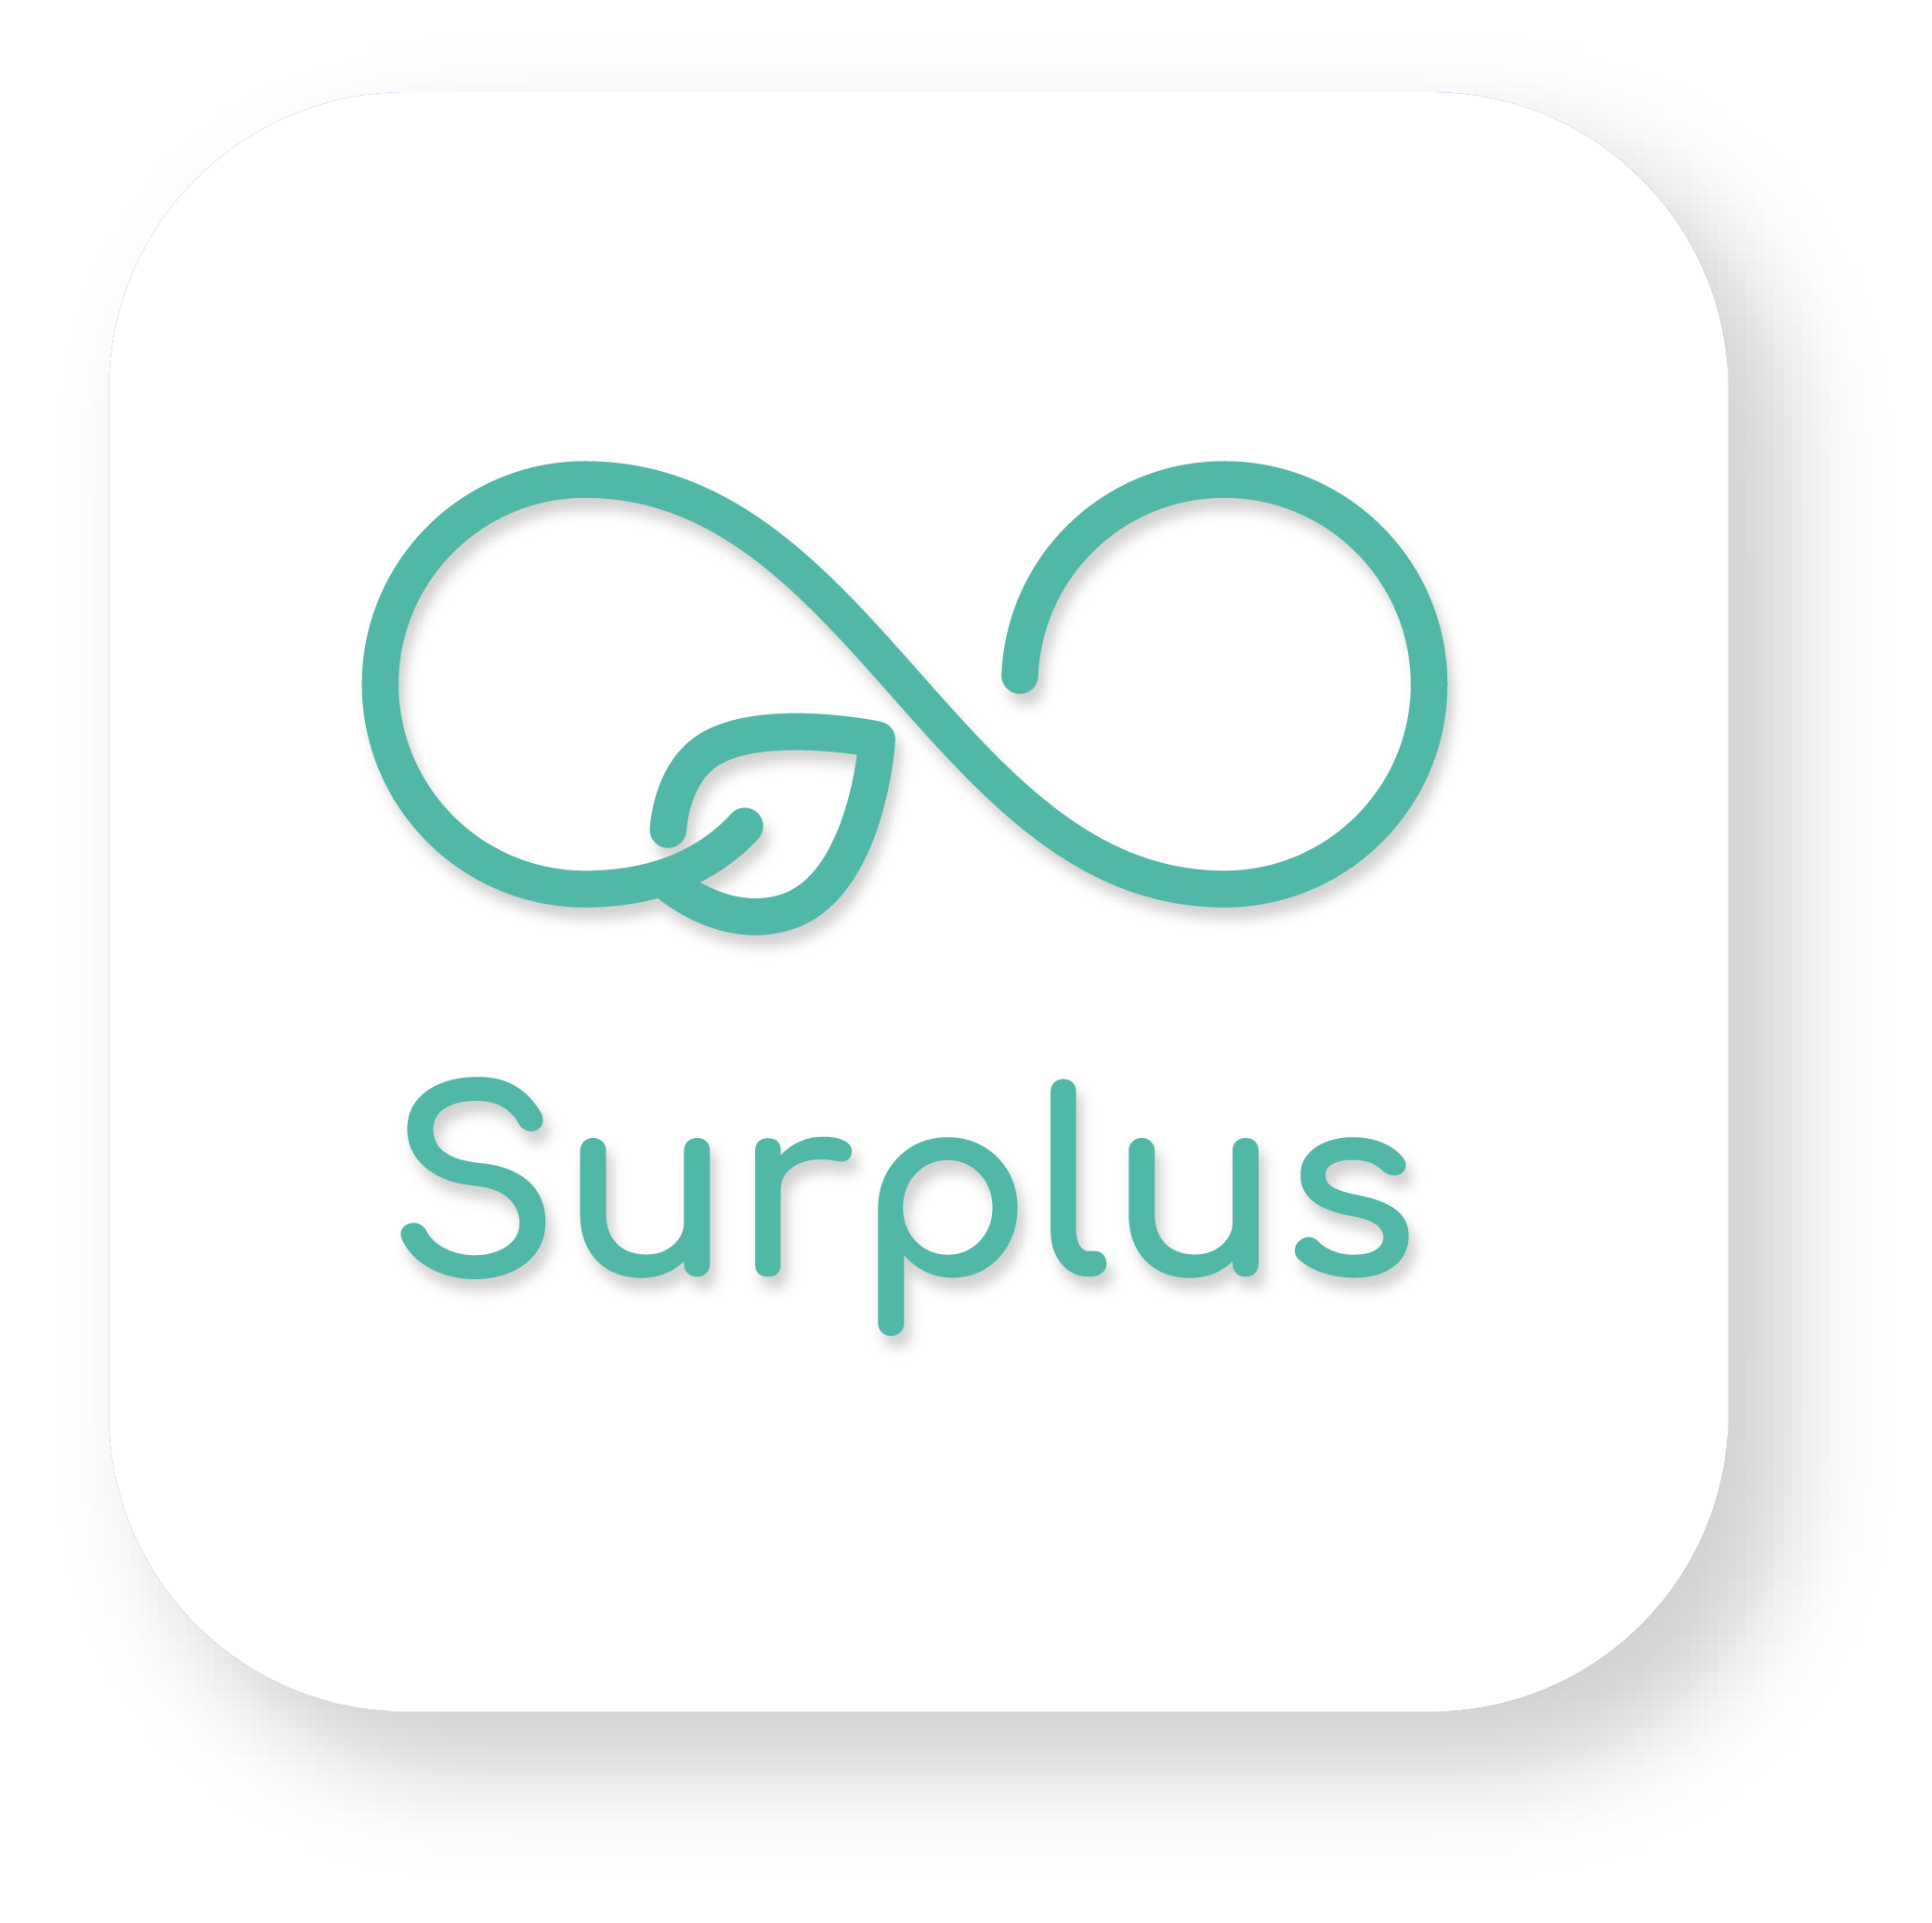 Surplus Indonesia - Certified B Corporation in Indonesia